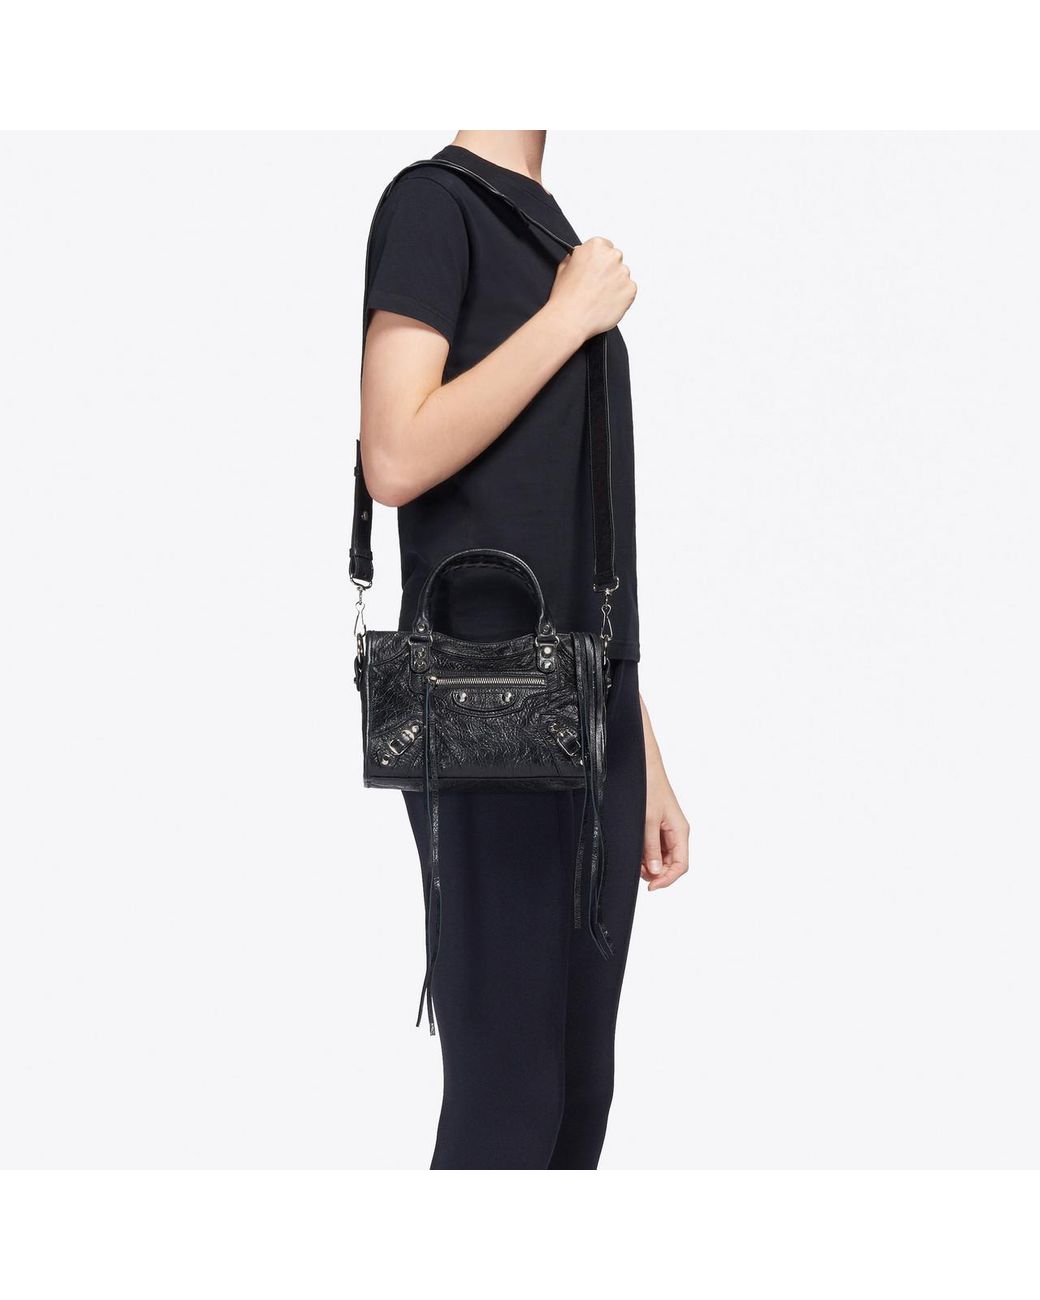 Balenciaga Classic City Shoulder Bag Mini Black in Lambskin with Palladium   US